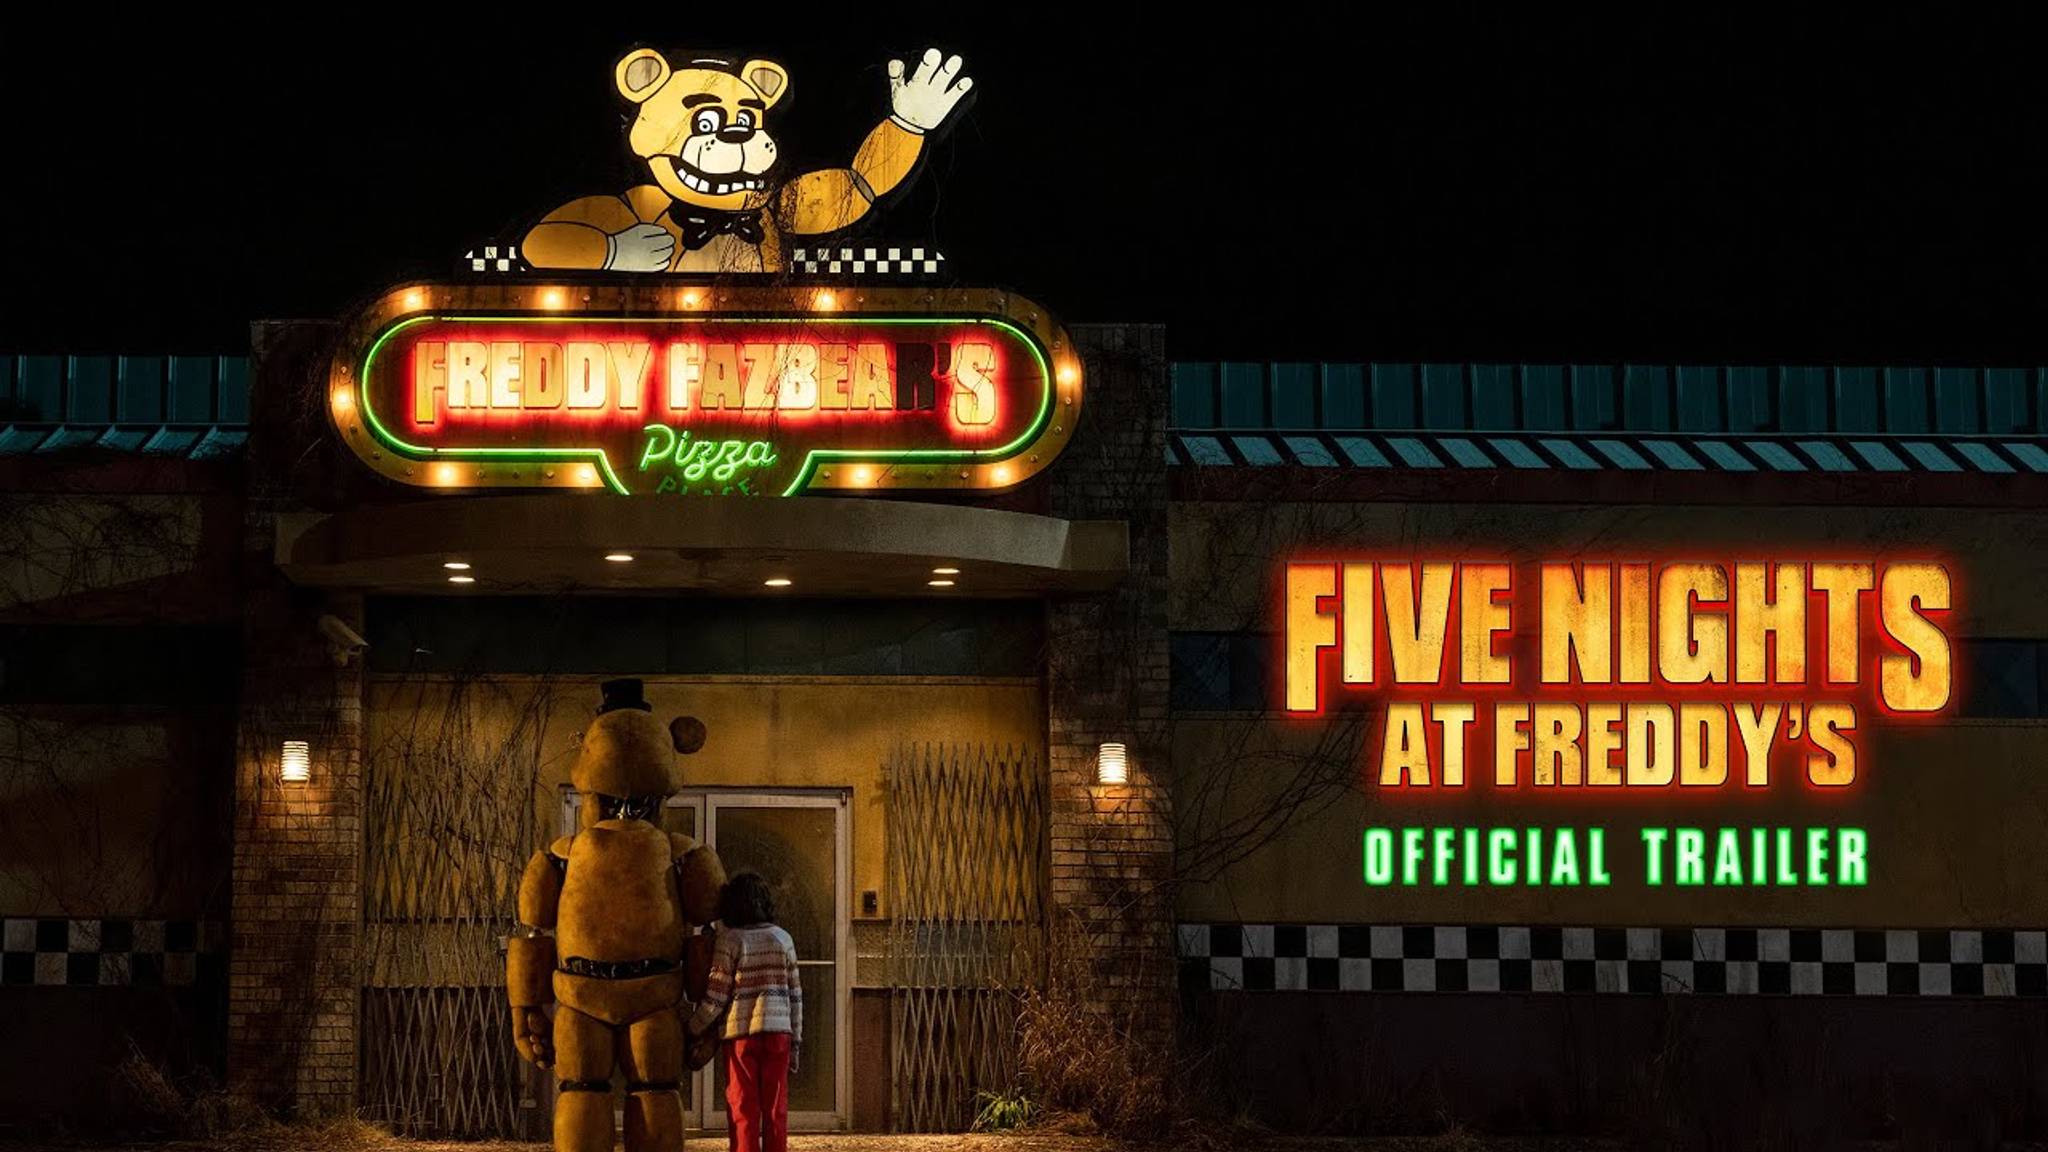 Five Nights at Freddy's offers Gen Z nostalgic horror